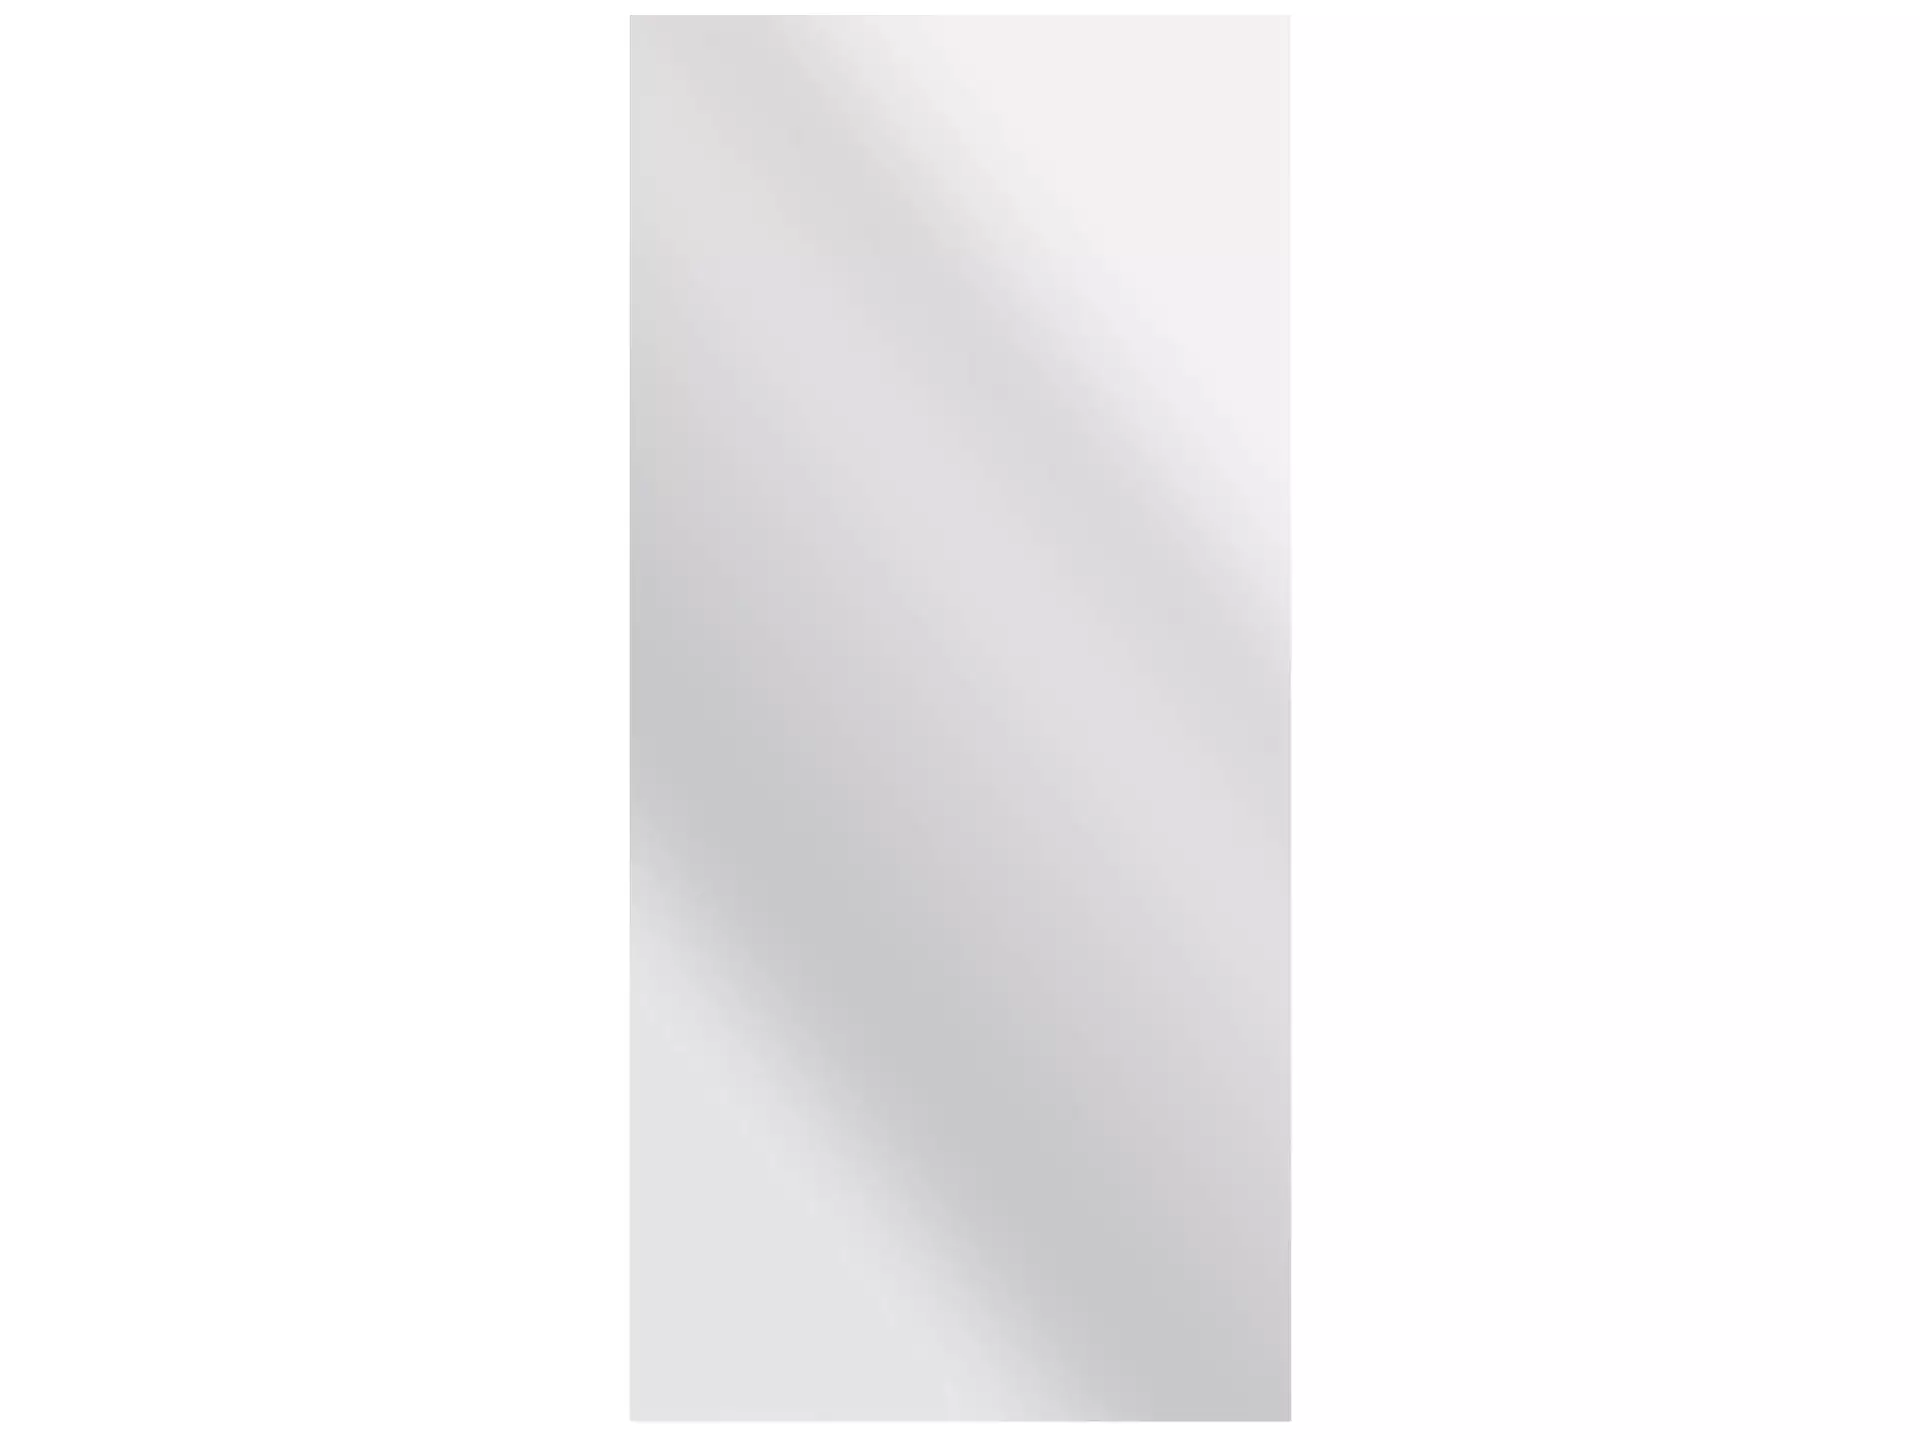 Spiegel Rahmenlos, 66 x 140 cm image LAND